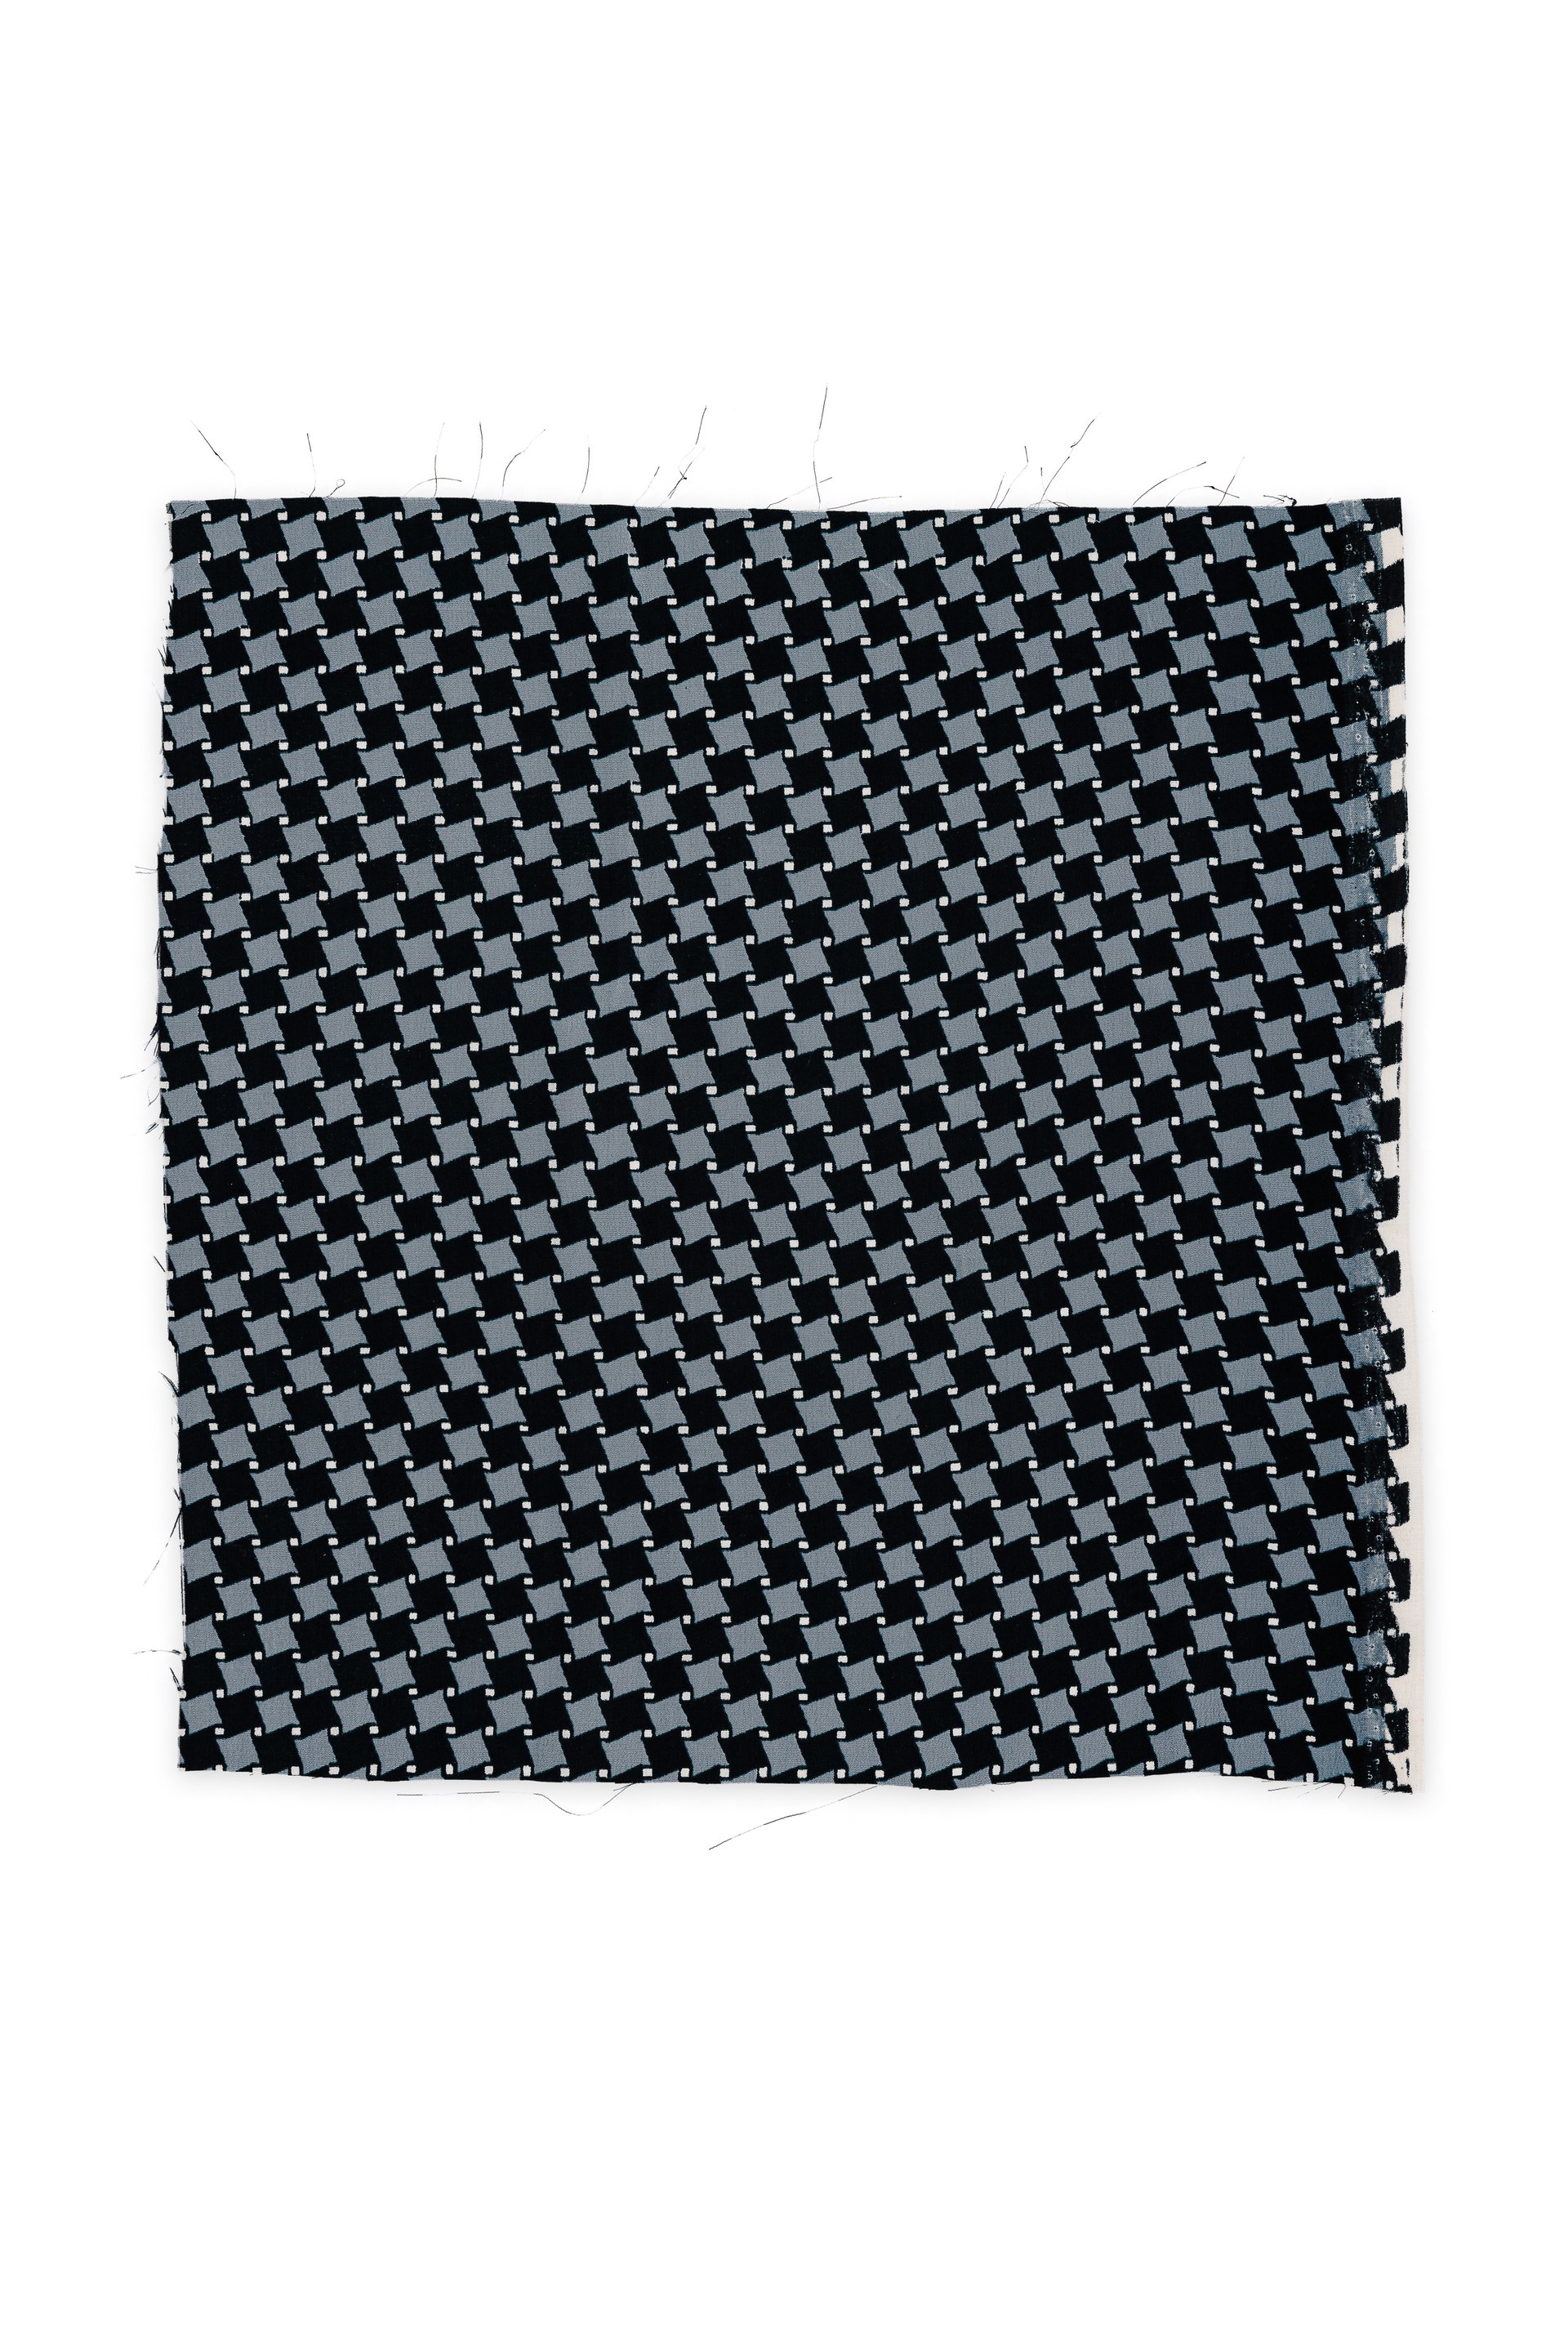 Anna AndreevaThe Grid, 1977Silk textile32 x 31 cm